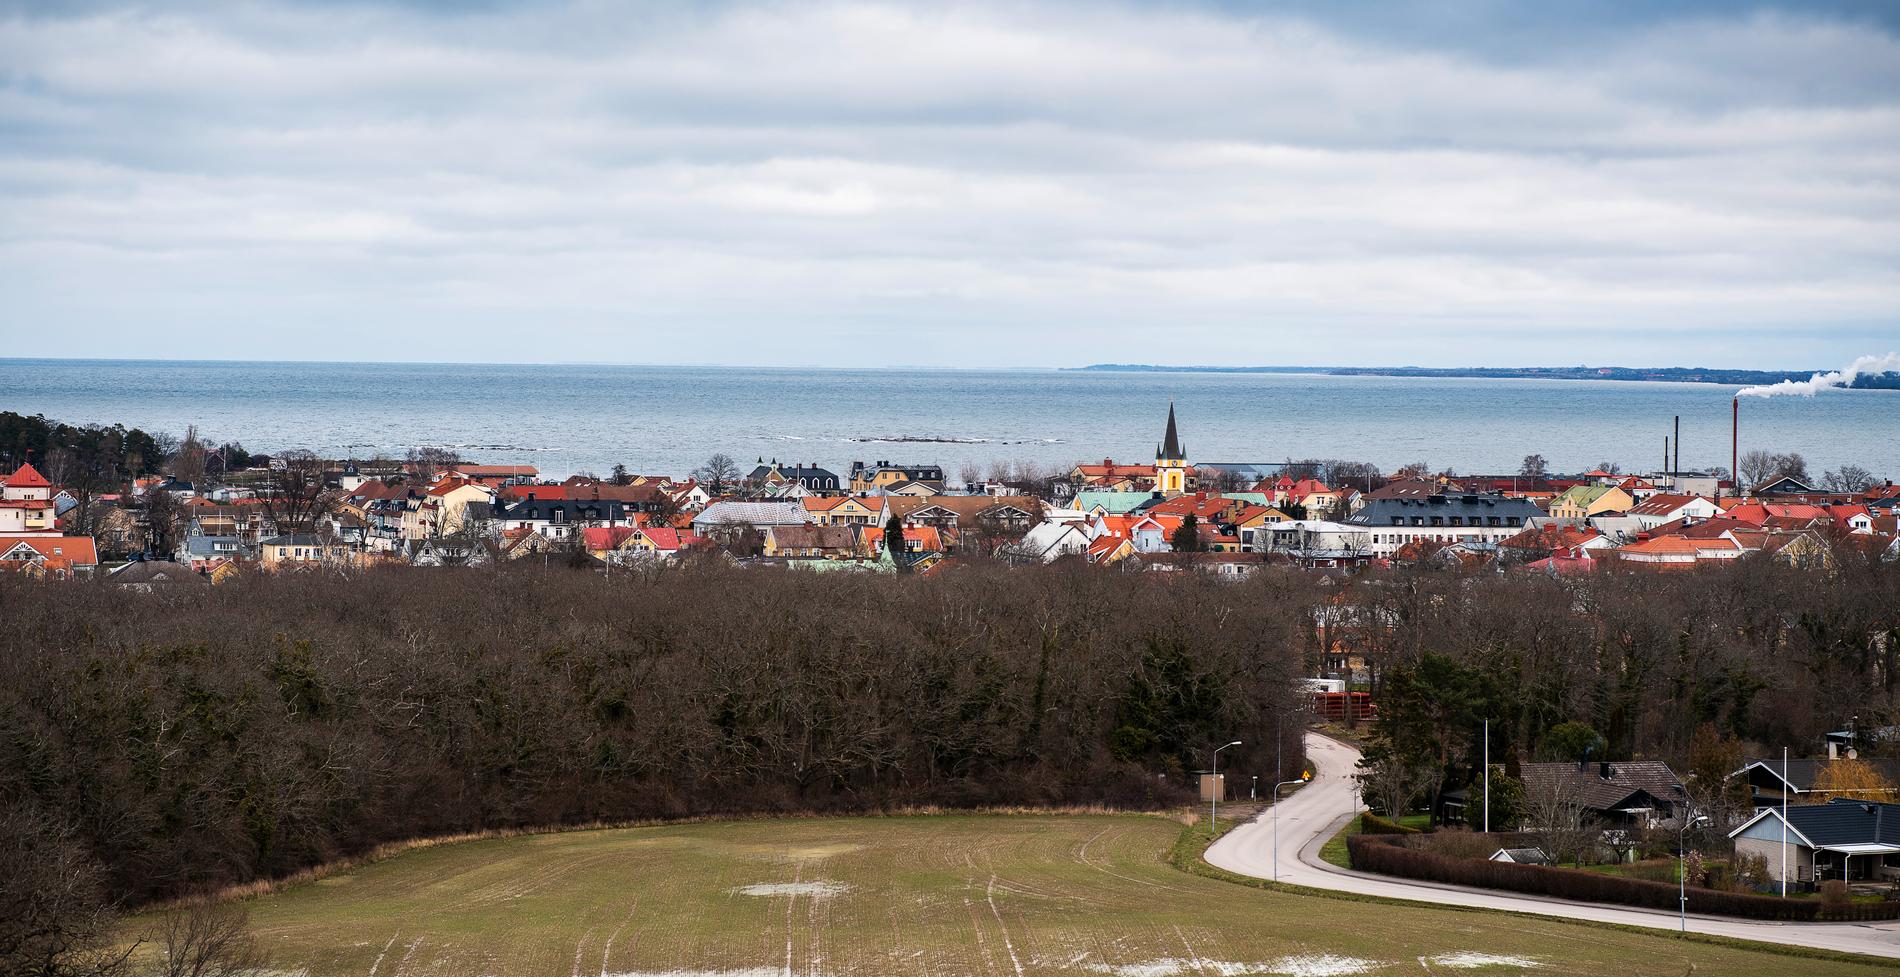 Borgholm på Öland har landets högsta andel med äldre befolkning.